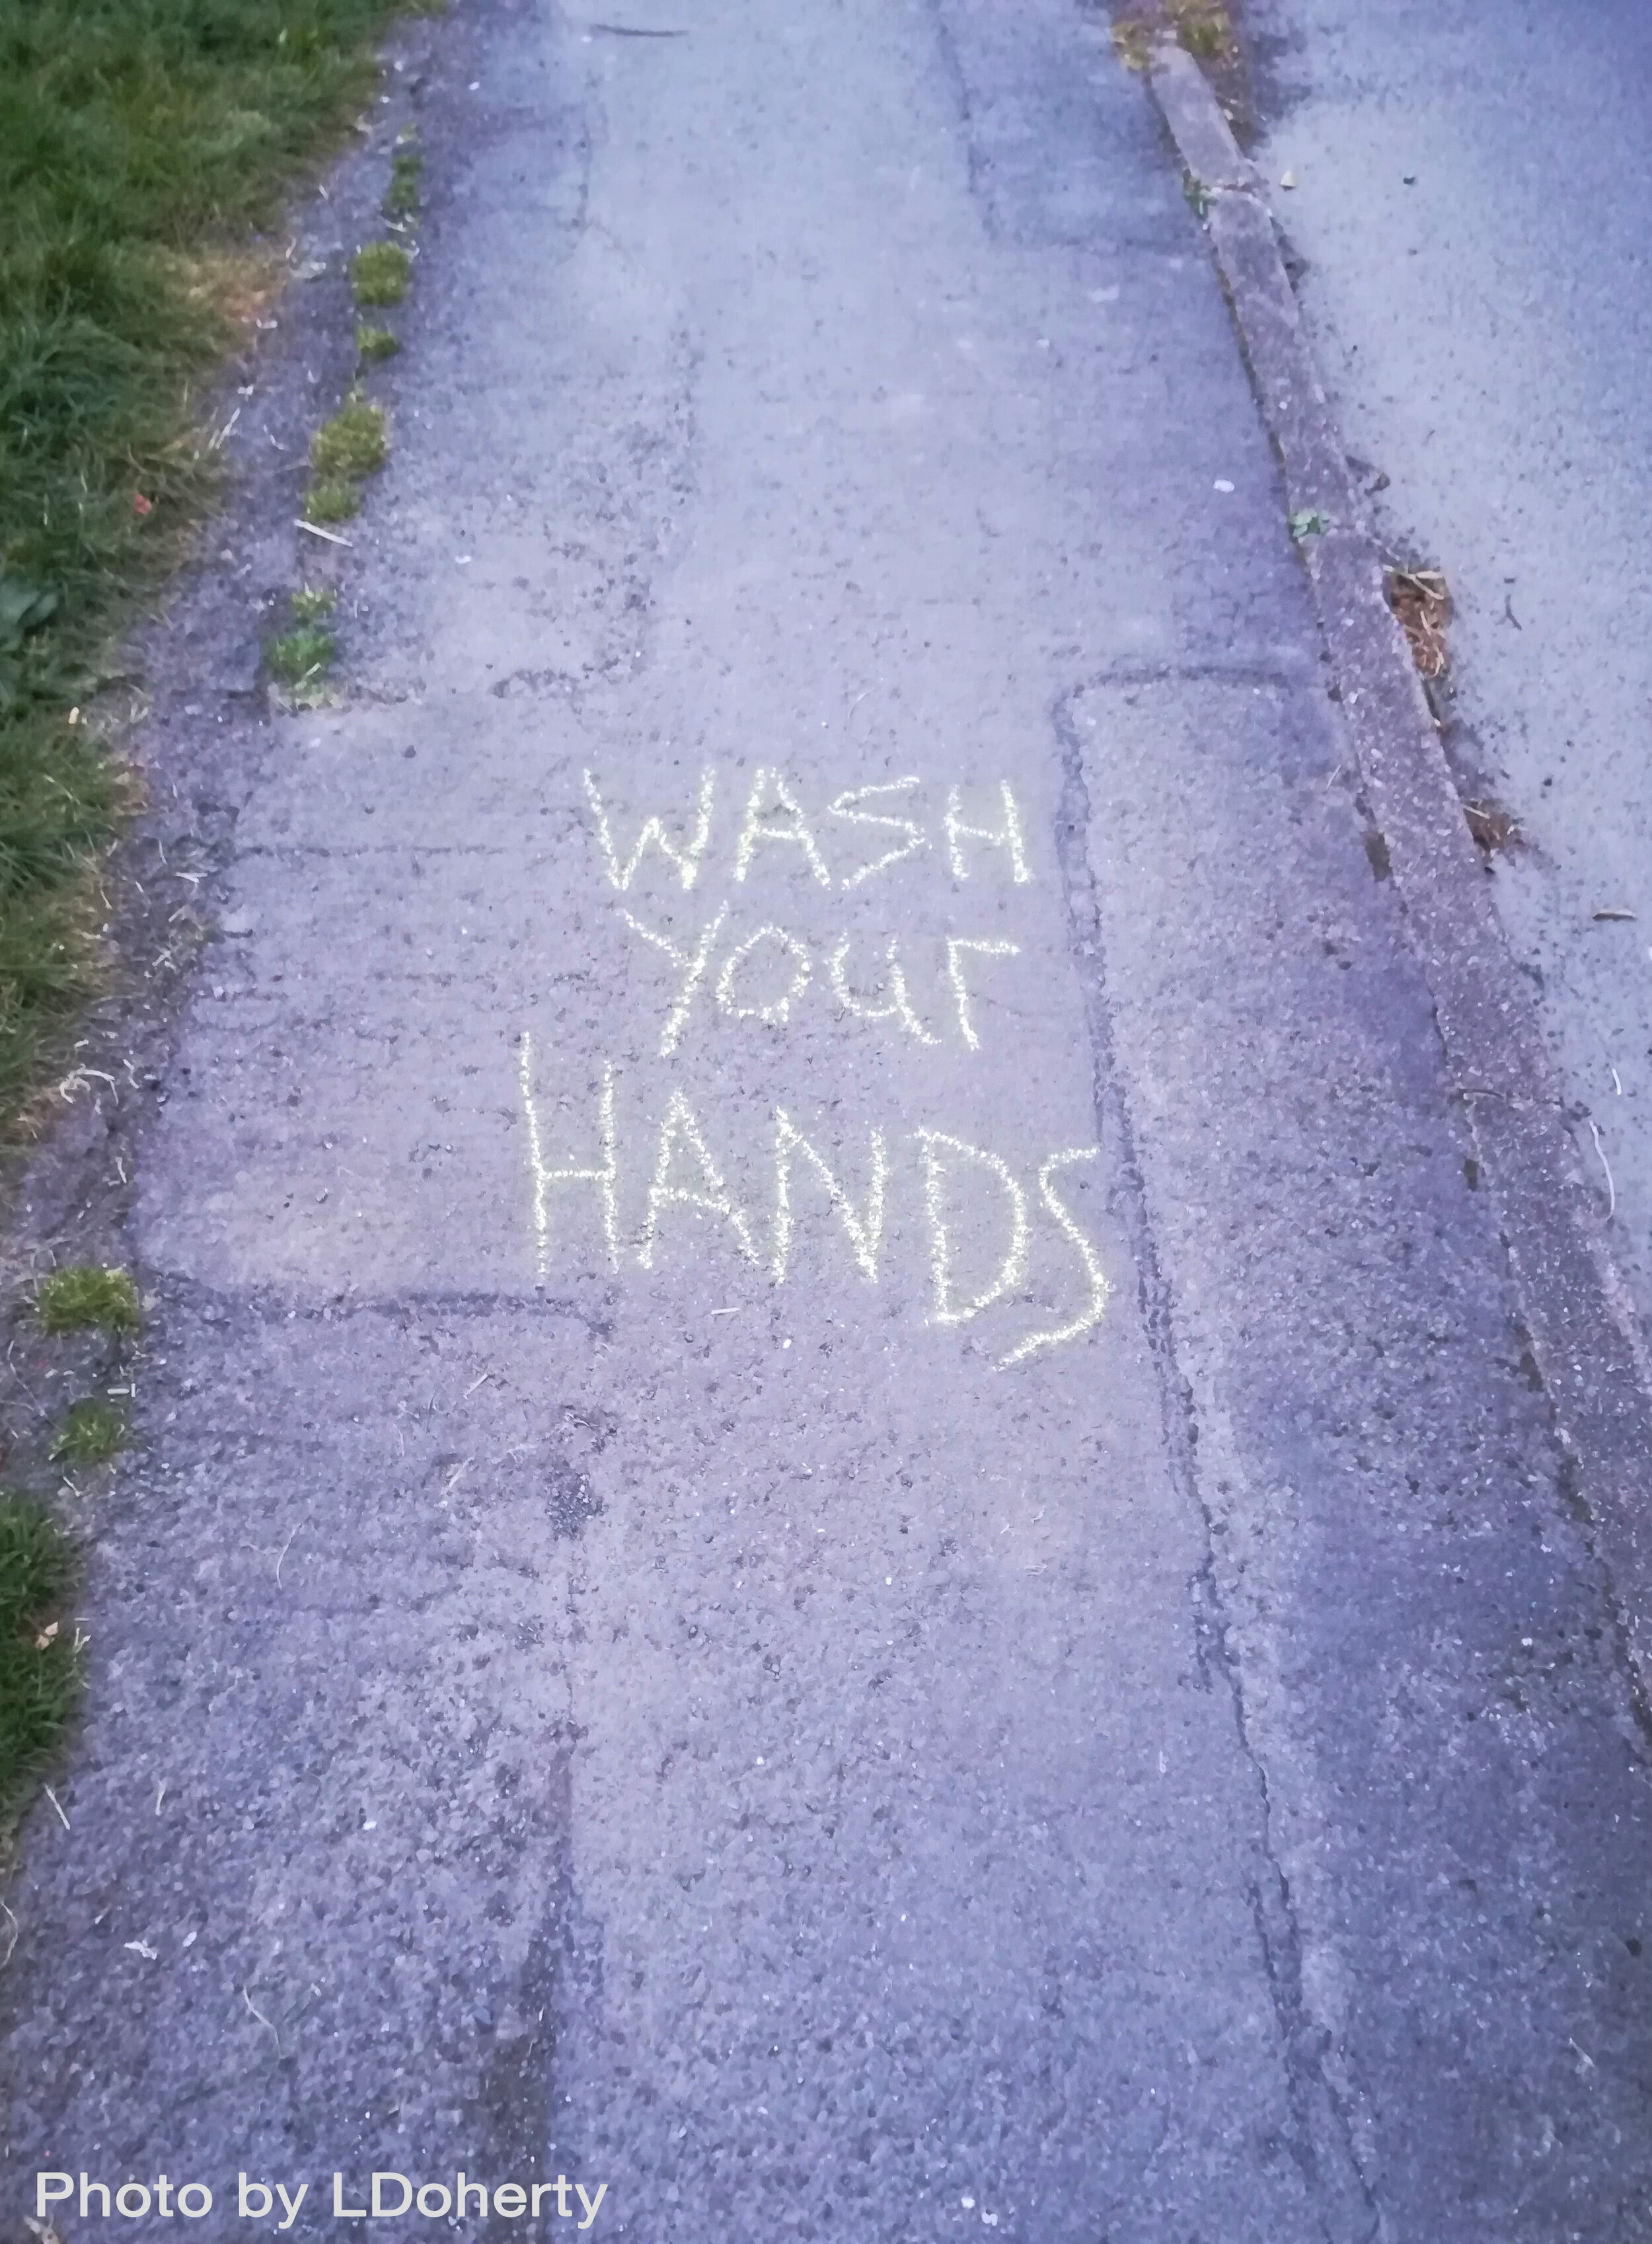 Wash Your Hands 080420 LDoherty.jpg